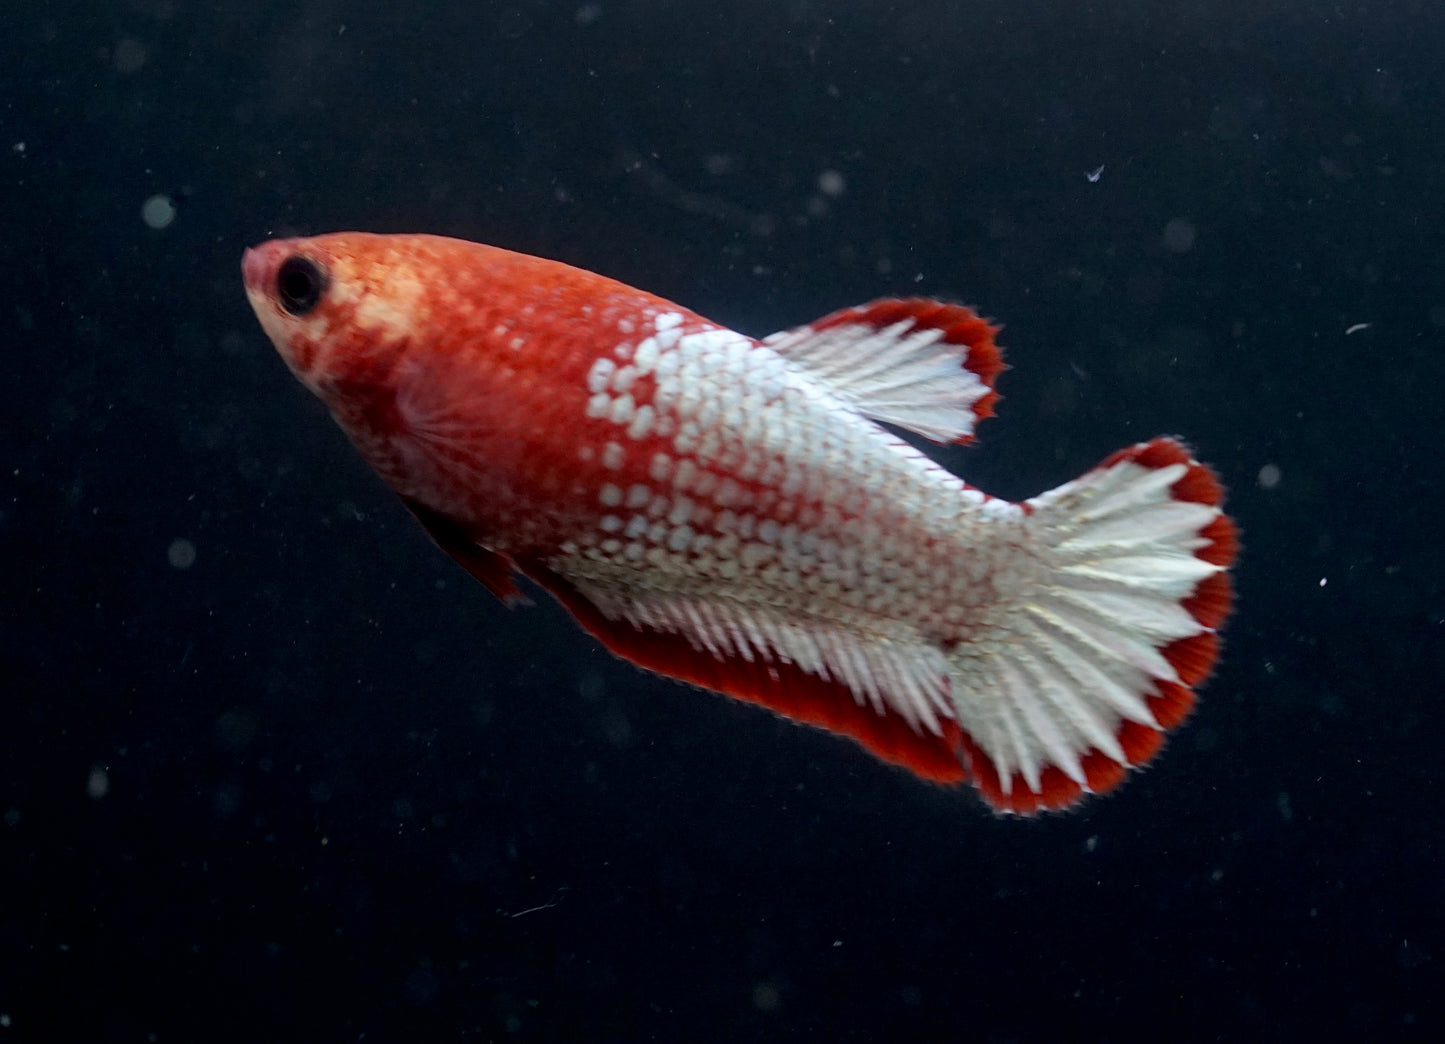 Breeding Pair - #2 Red Fancy Hell Boy Star Tail - Premium Grade Betta Fish - Live Aquarium Fish